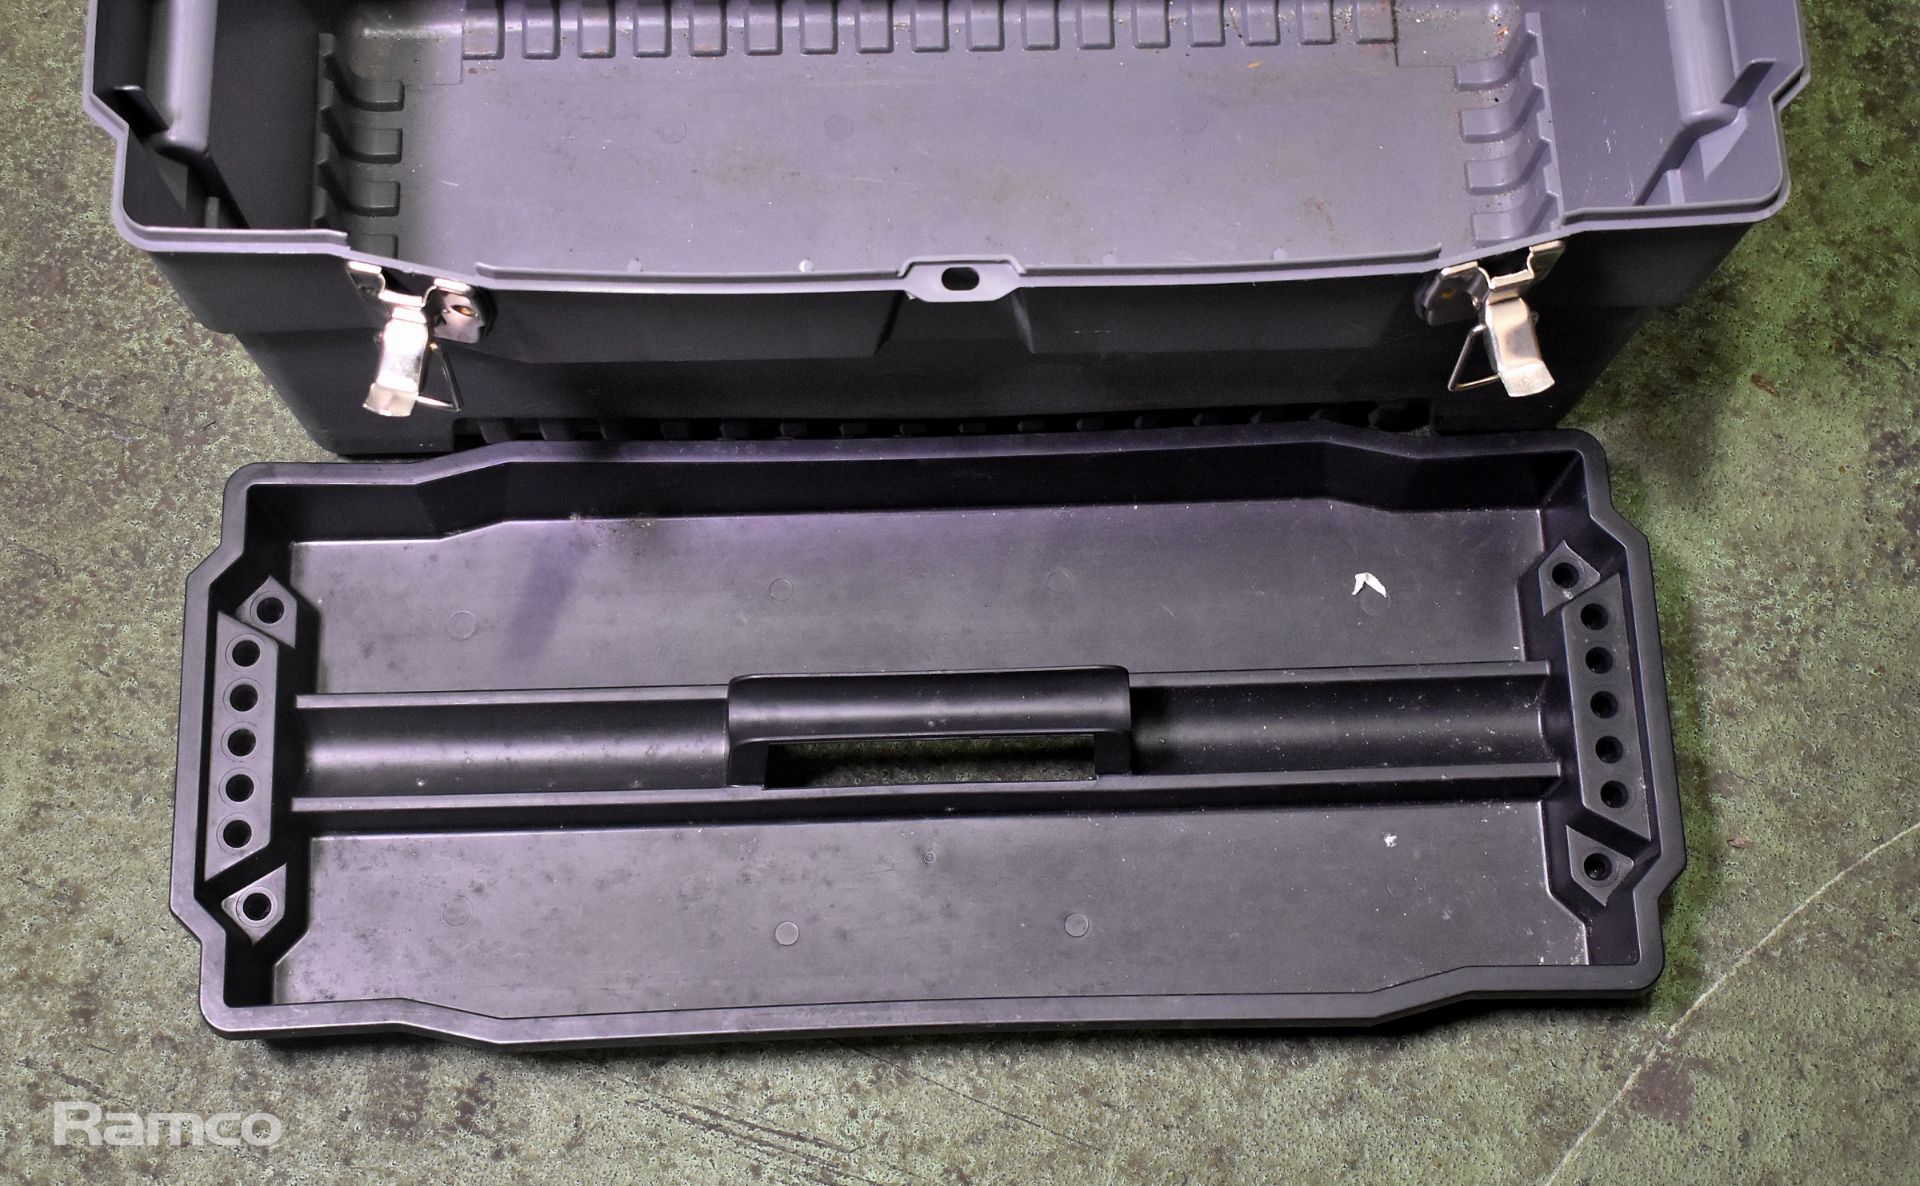 Stack-On grey plastic tool box - 25x60x30cm - Image 2 of 3